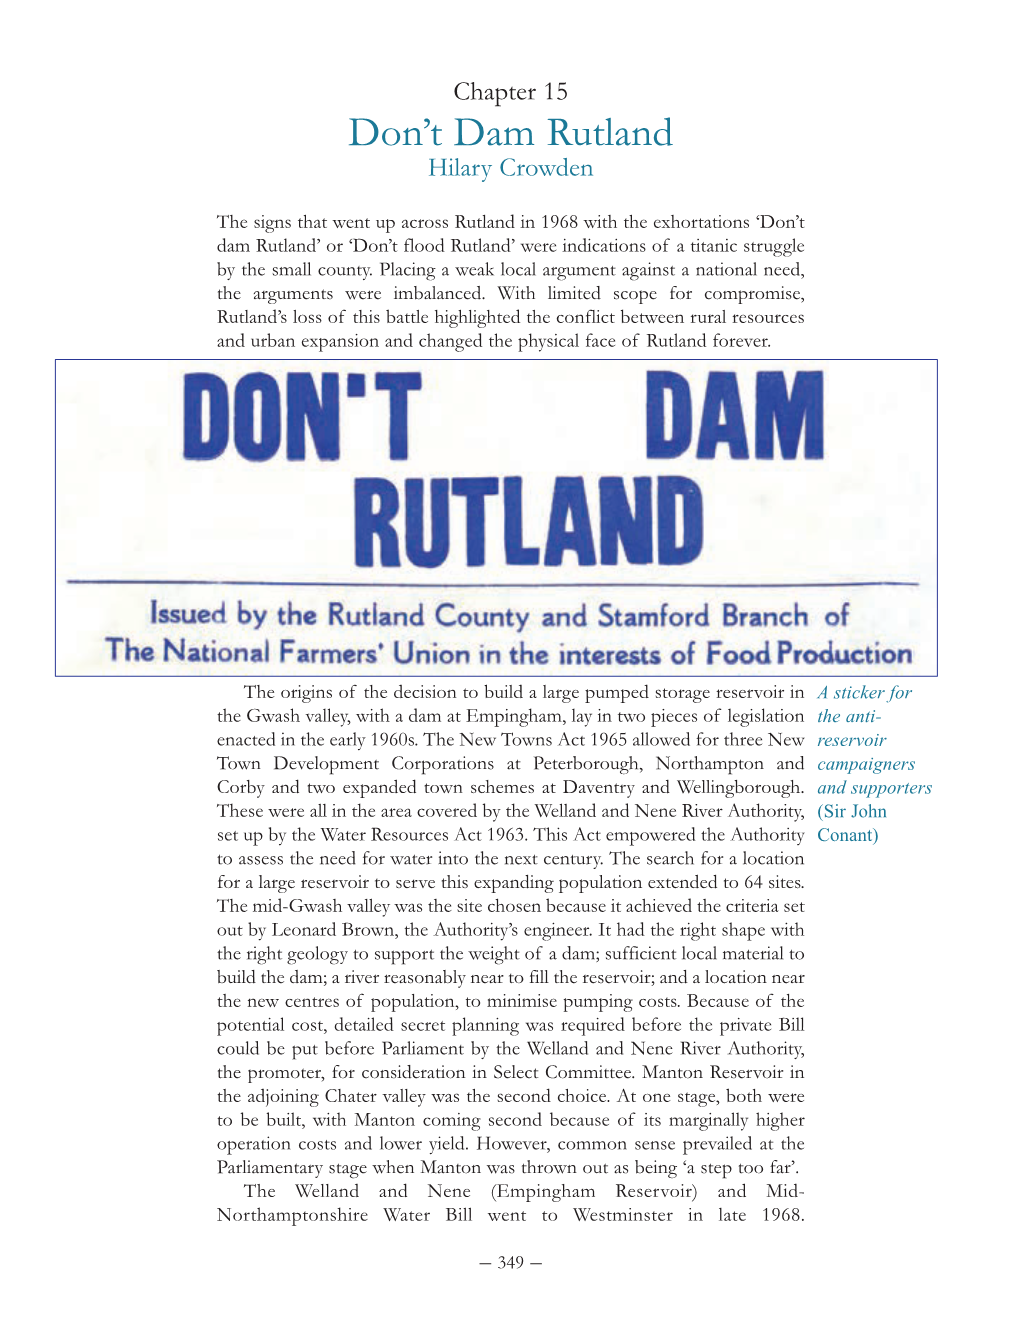 Don't Dam Rutland 10/3/08 13:03 Page 1